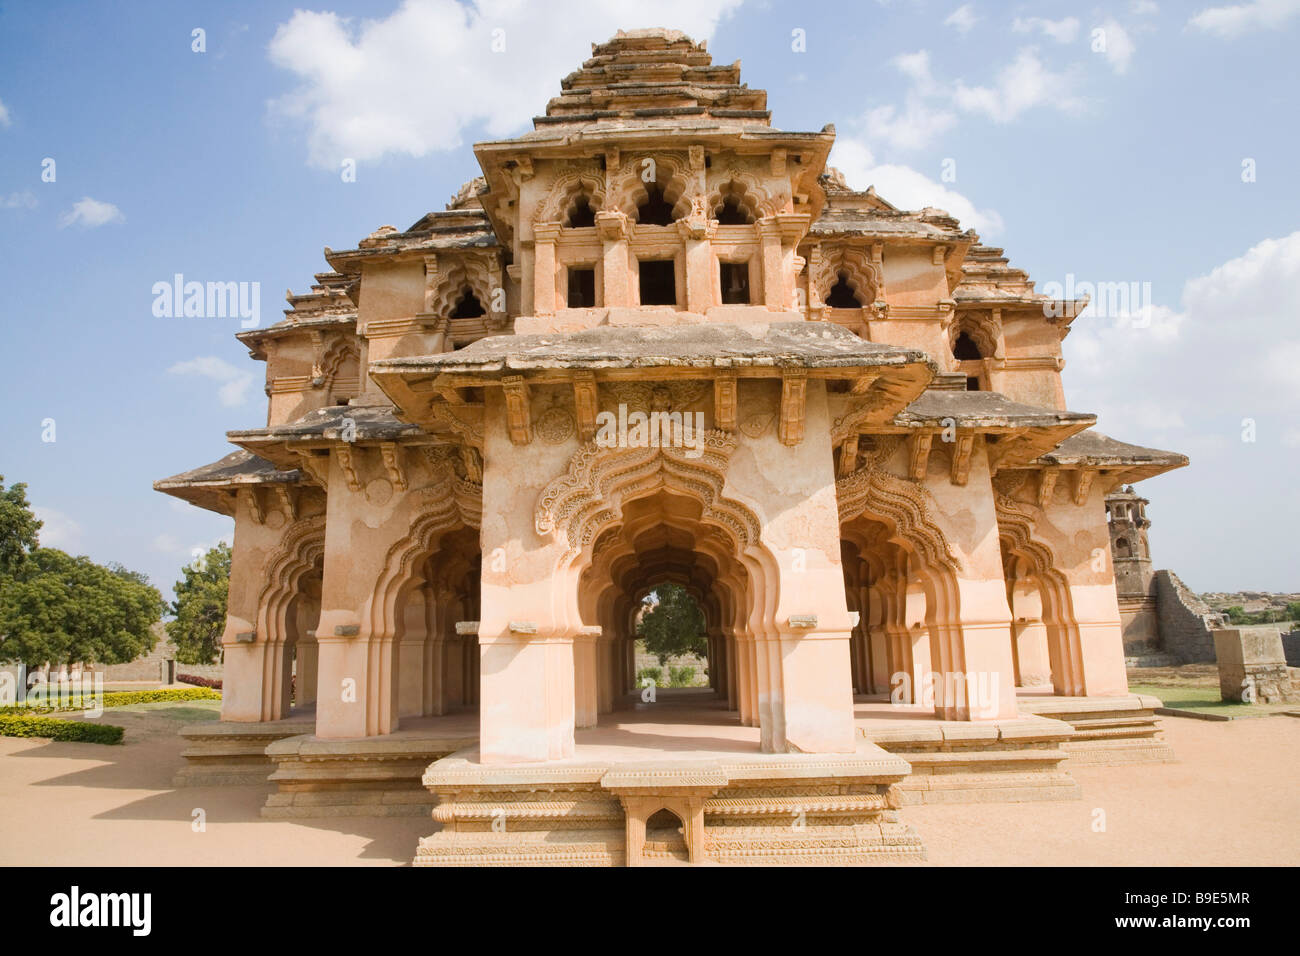 Fassade von einer Lotus Tempel, Hampi, Karnataka, Indien Stockfoto